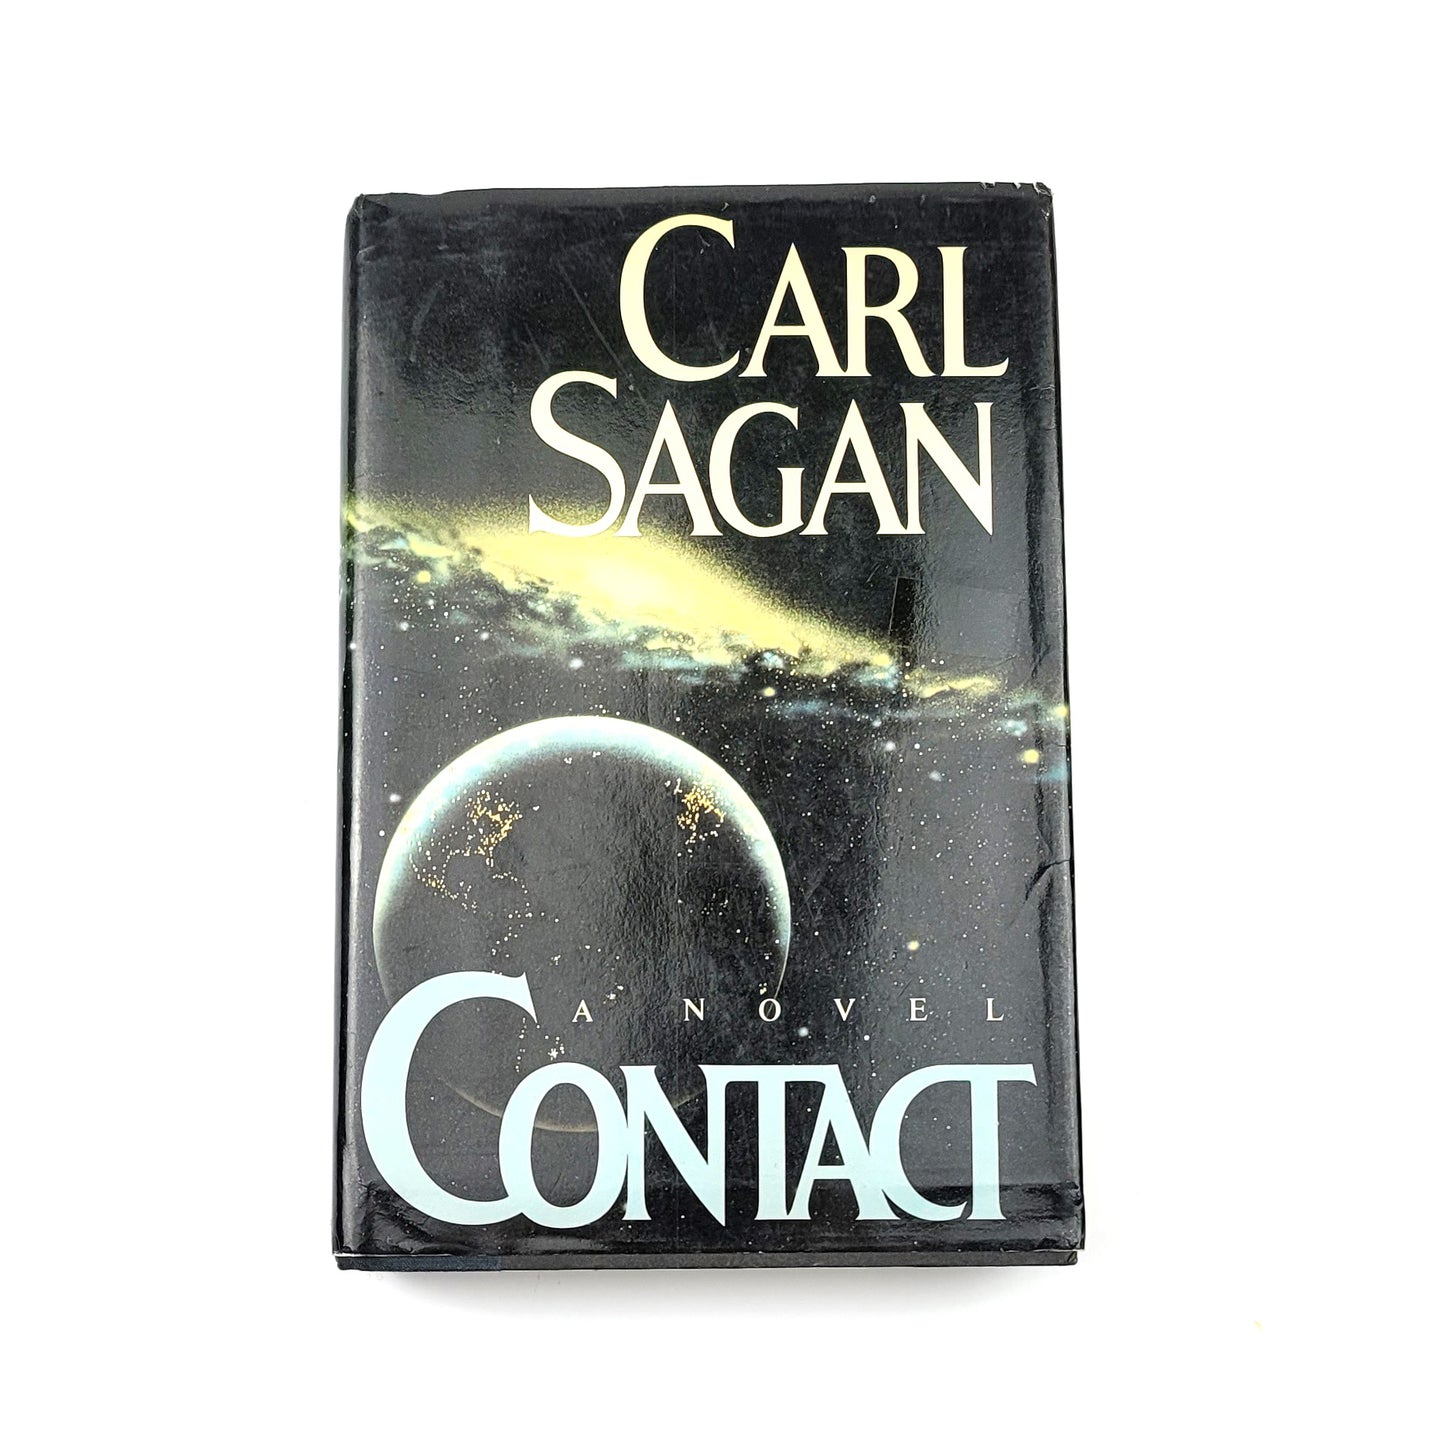 Contact: A Novel by Carl Sagan (1985 Hardback with dust jacket)